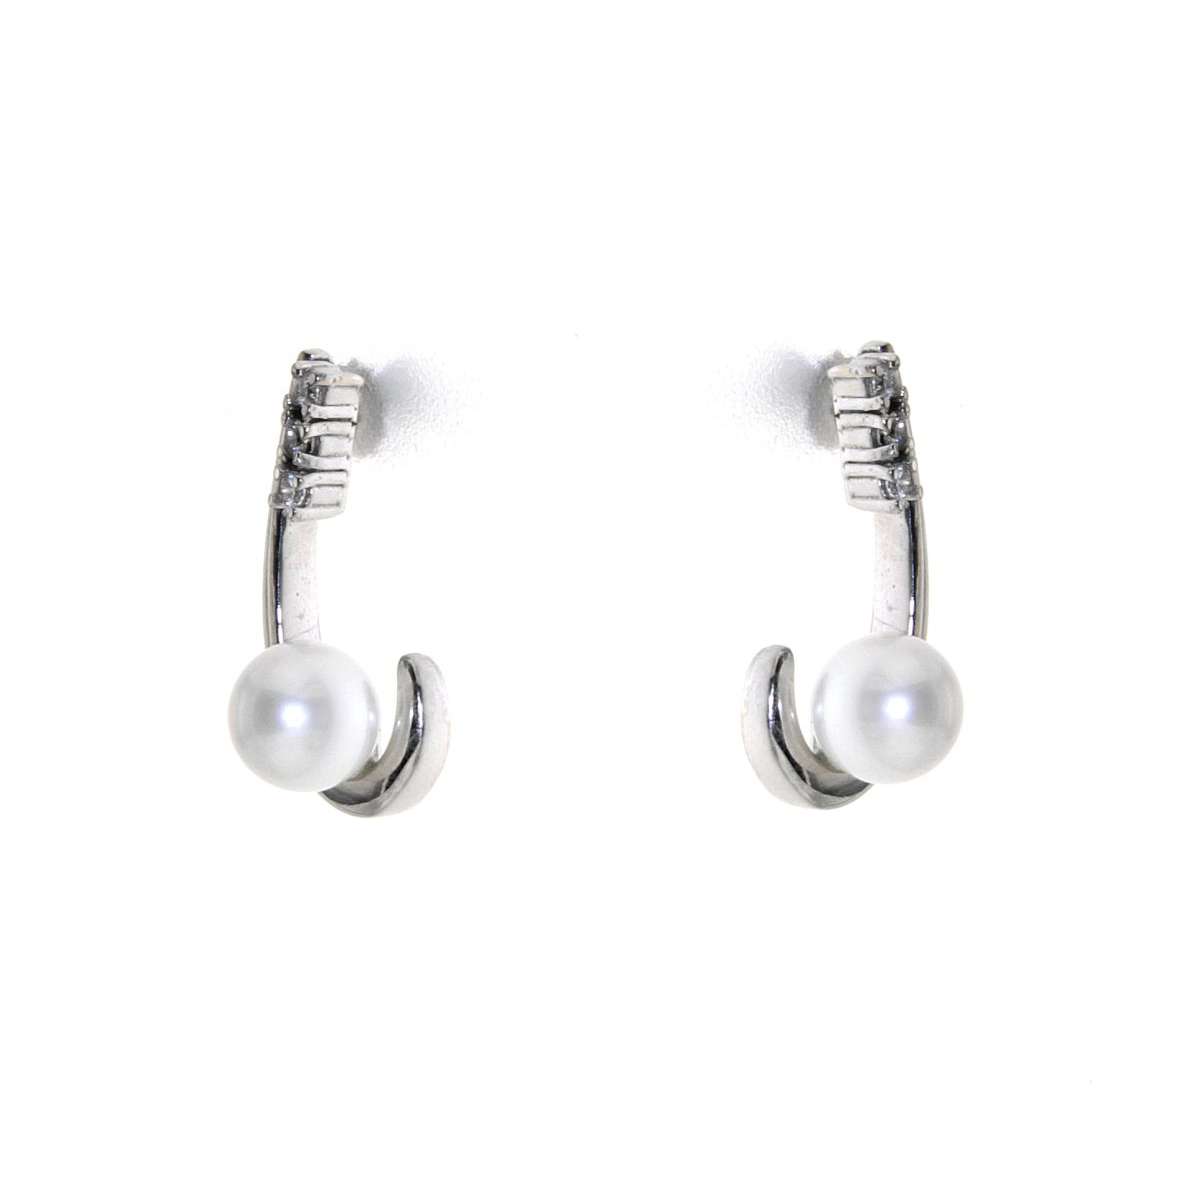 White gold hook design earrings pearls 6mm 0.12 carats diamonds G-VS1